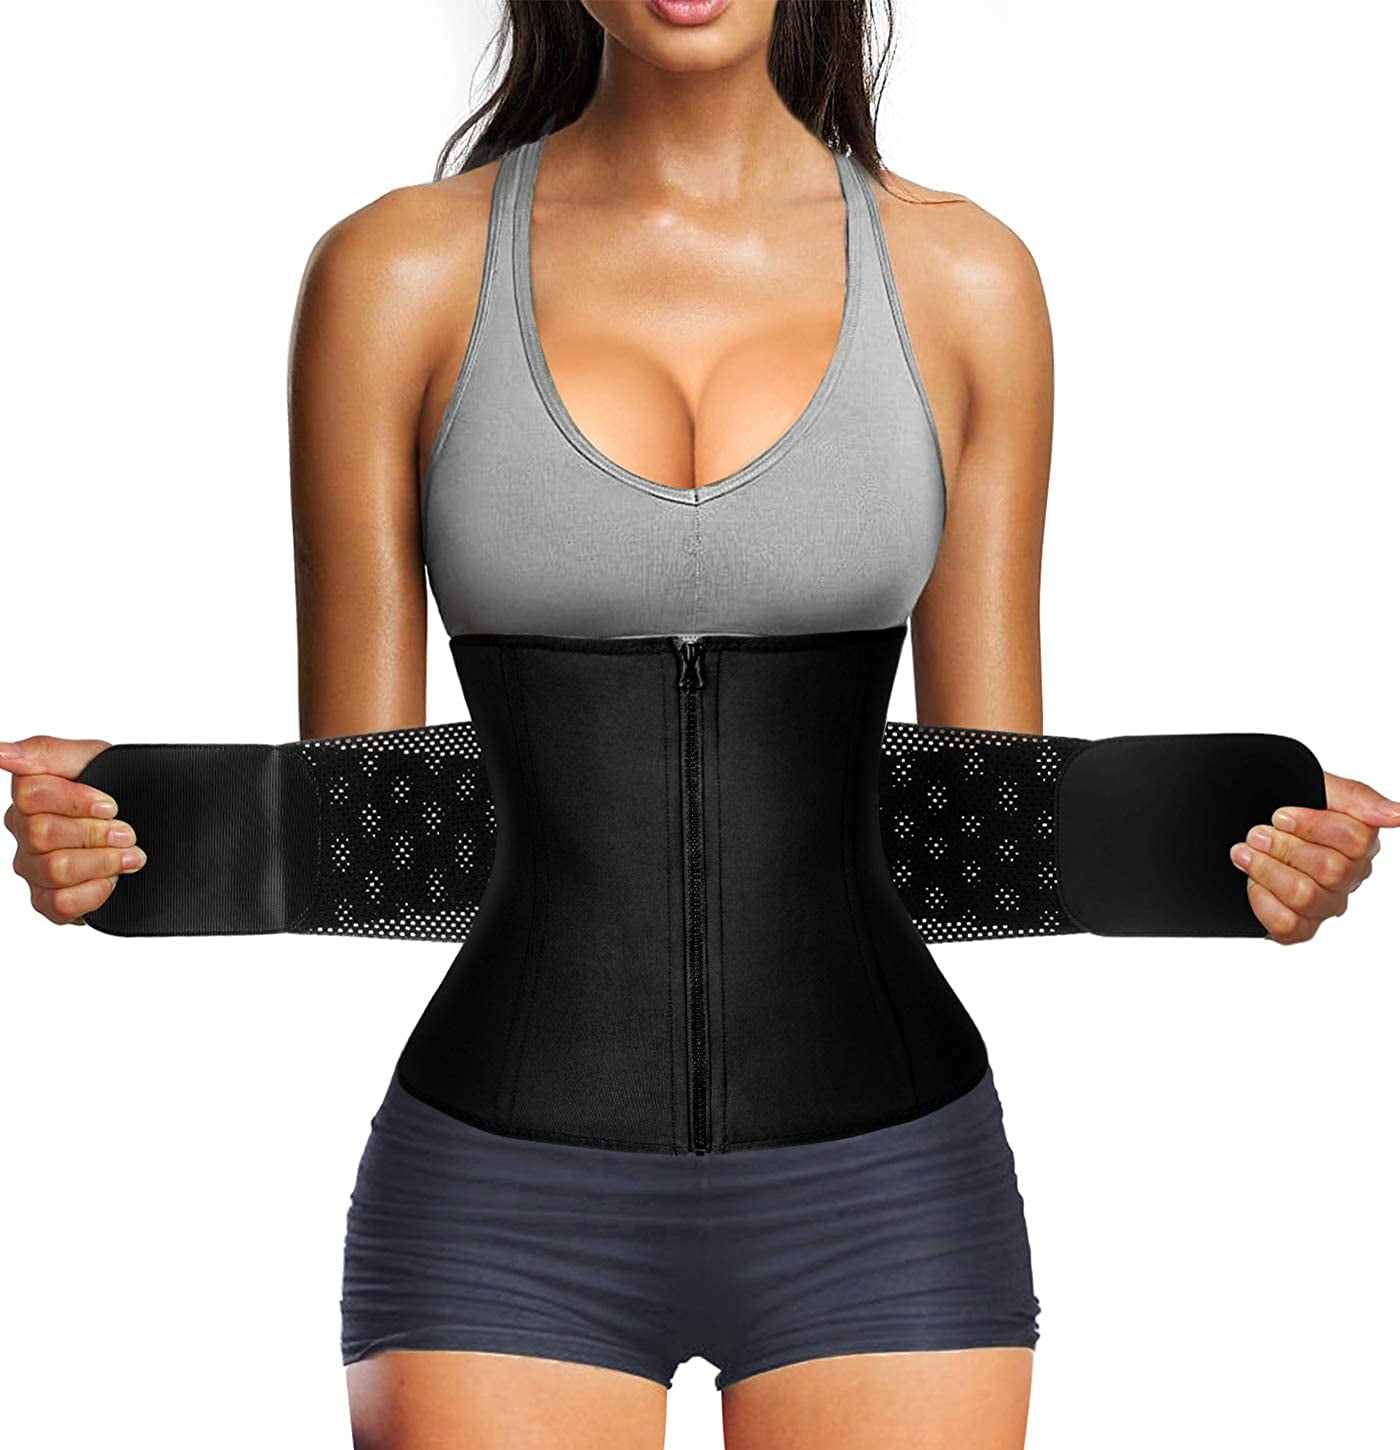 Women Trimmer Belt Hot Sweat Waist Trainer Corset Body Shaper Abdominal Slimming 